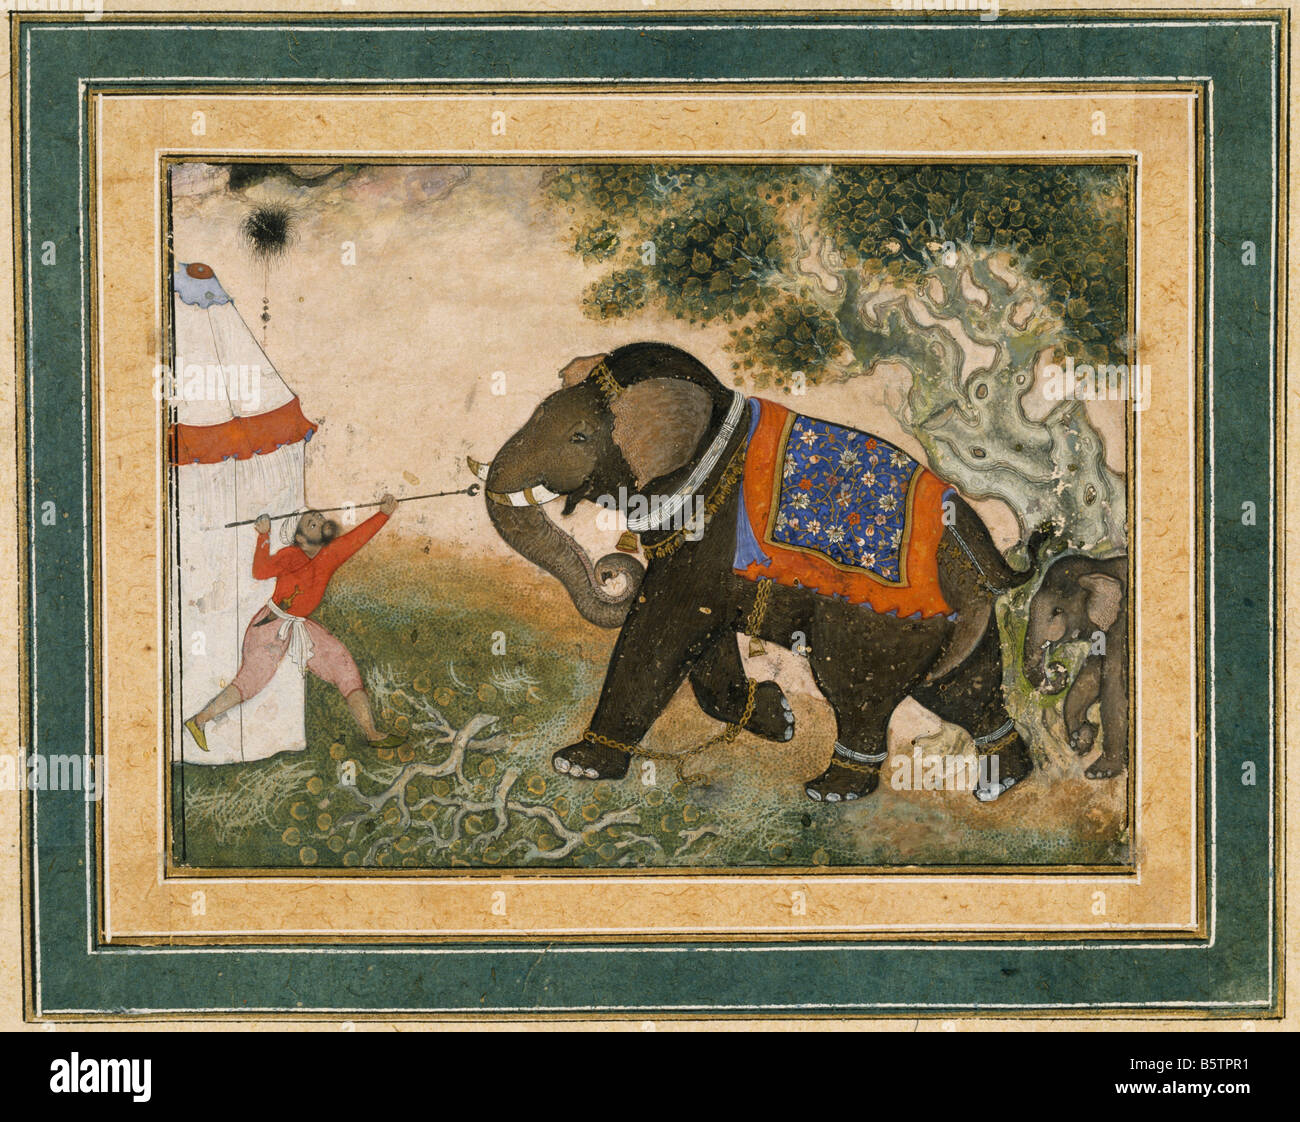 Einem wütenden Elefanten. Mughal 18x22.7 Cms c. 1580 A.d. National Museum of New Delhi India 52.43 Stockfoto